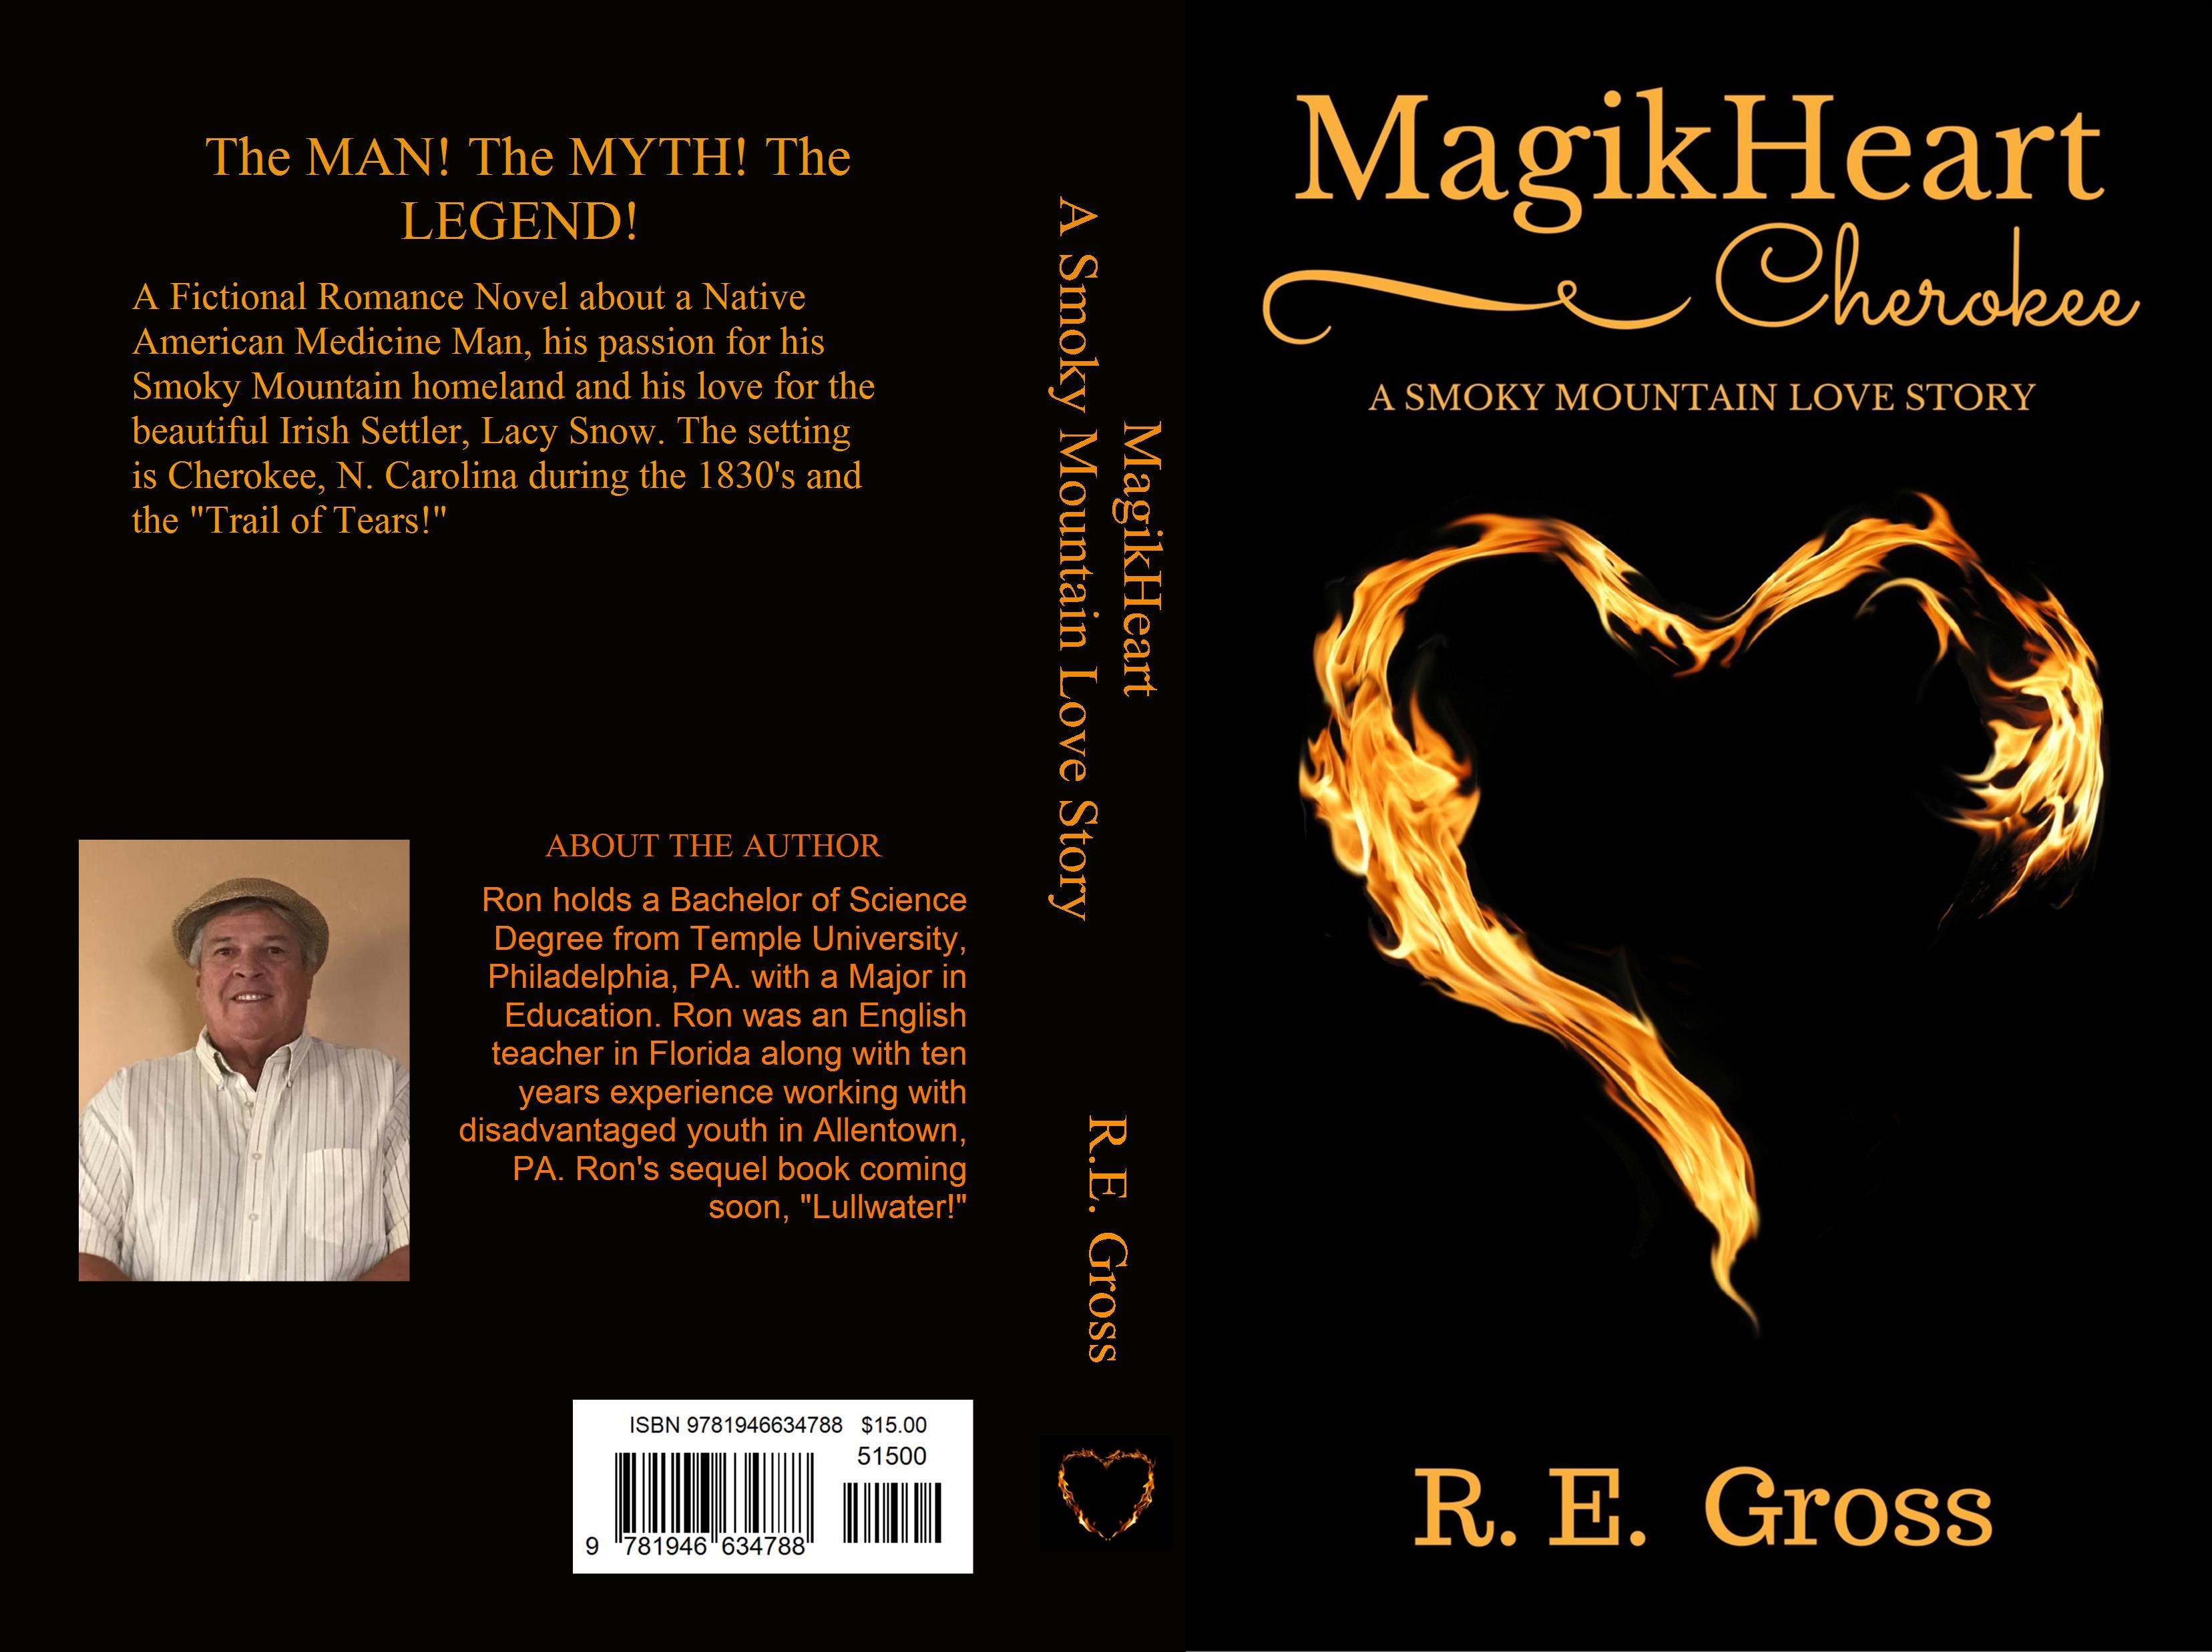 "MagikHeart" A Smoky Mountain Love Story cover image